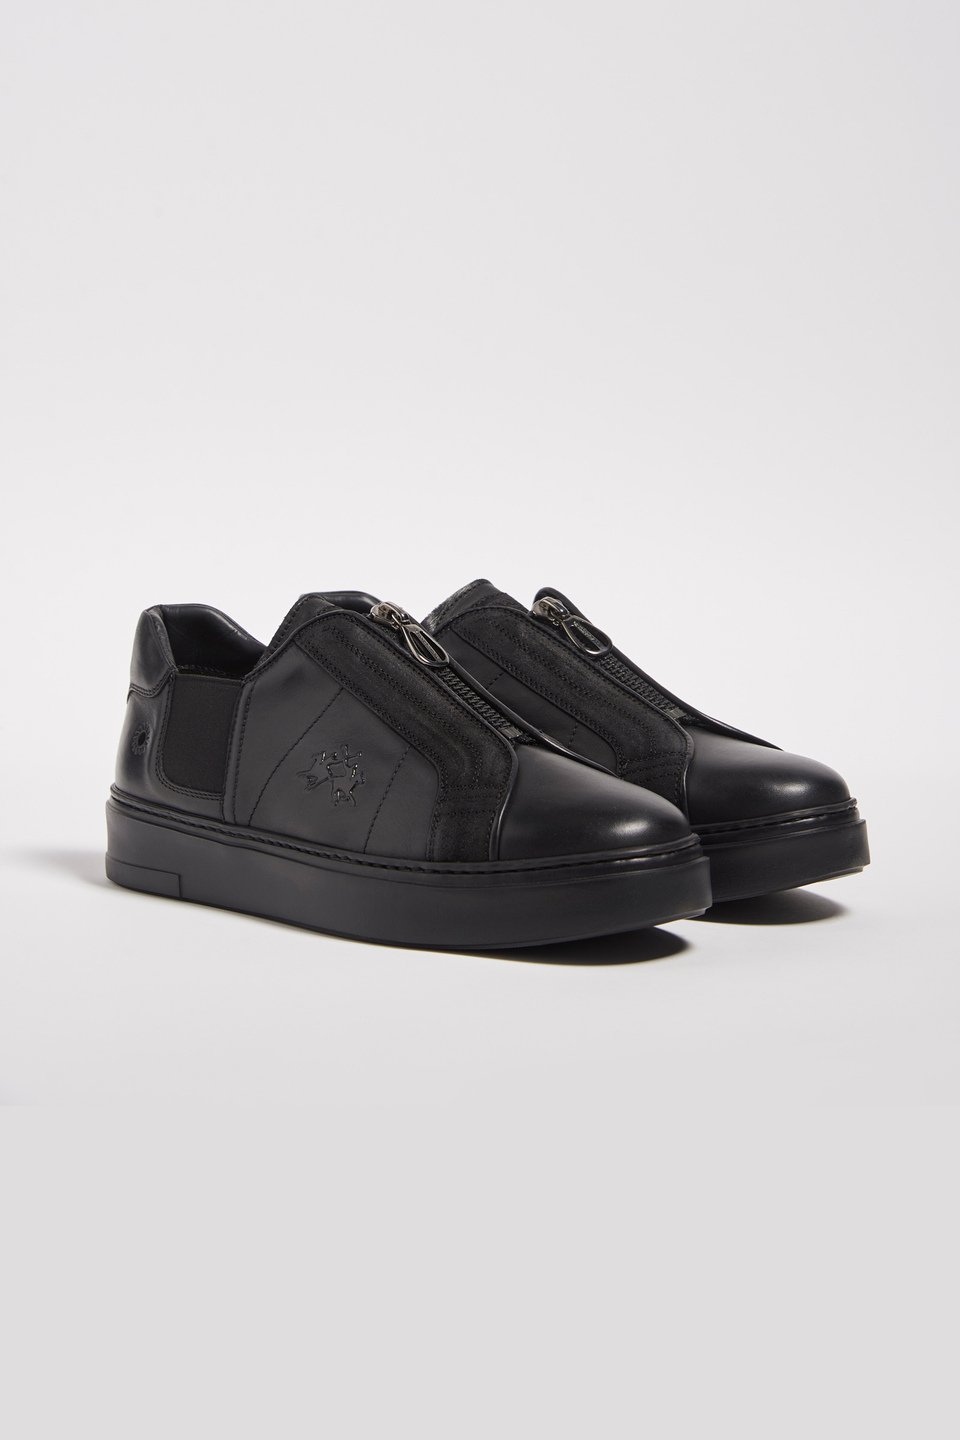 Leather shoes featuring a black crepe sole | La Martina - Official Online Shop